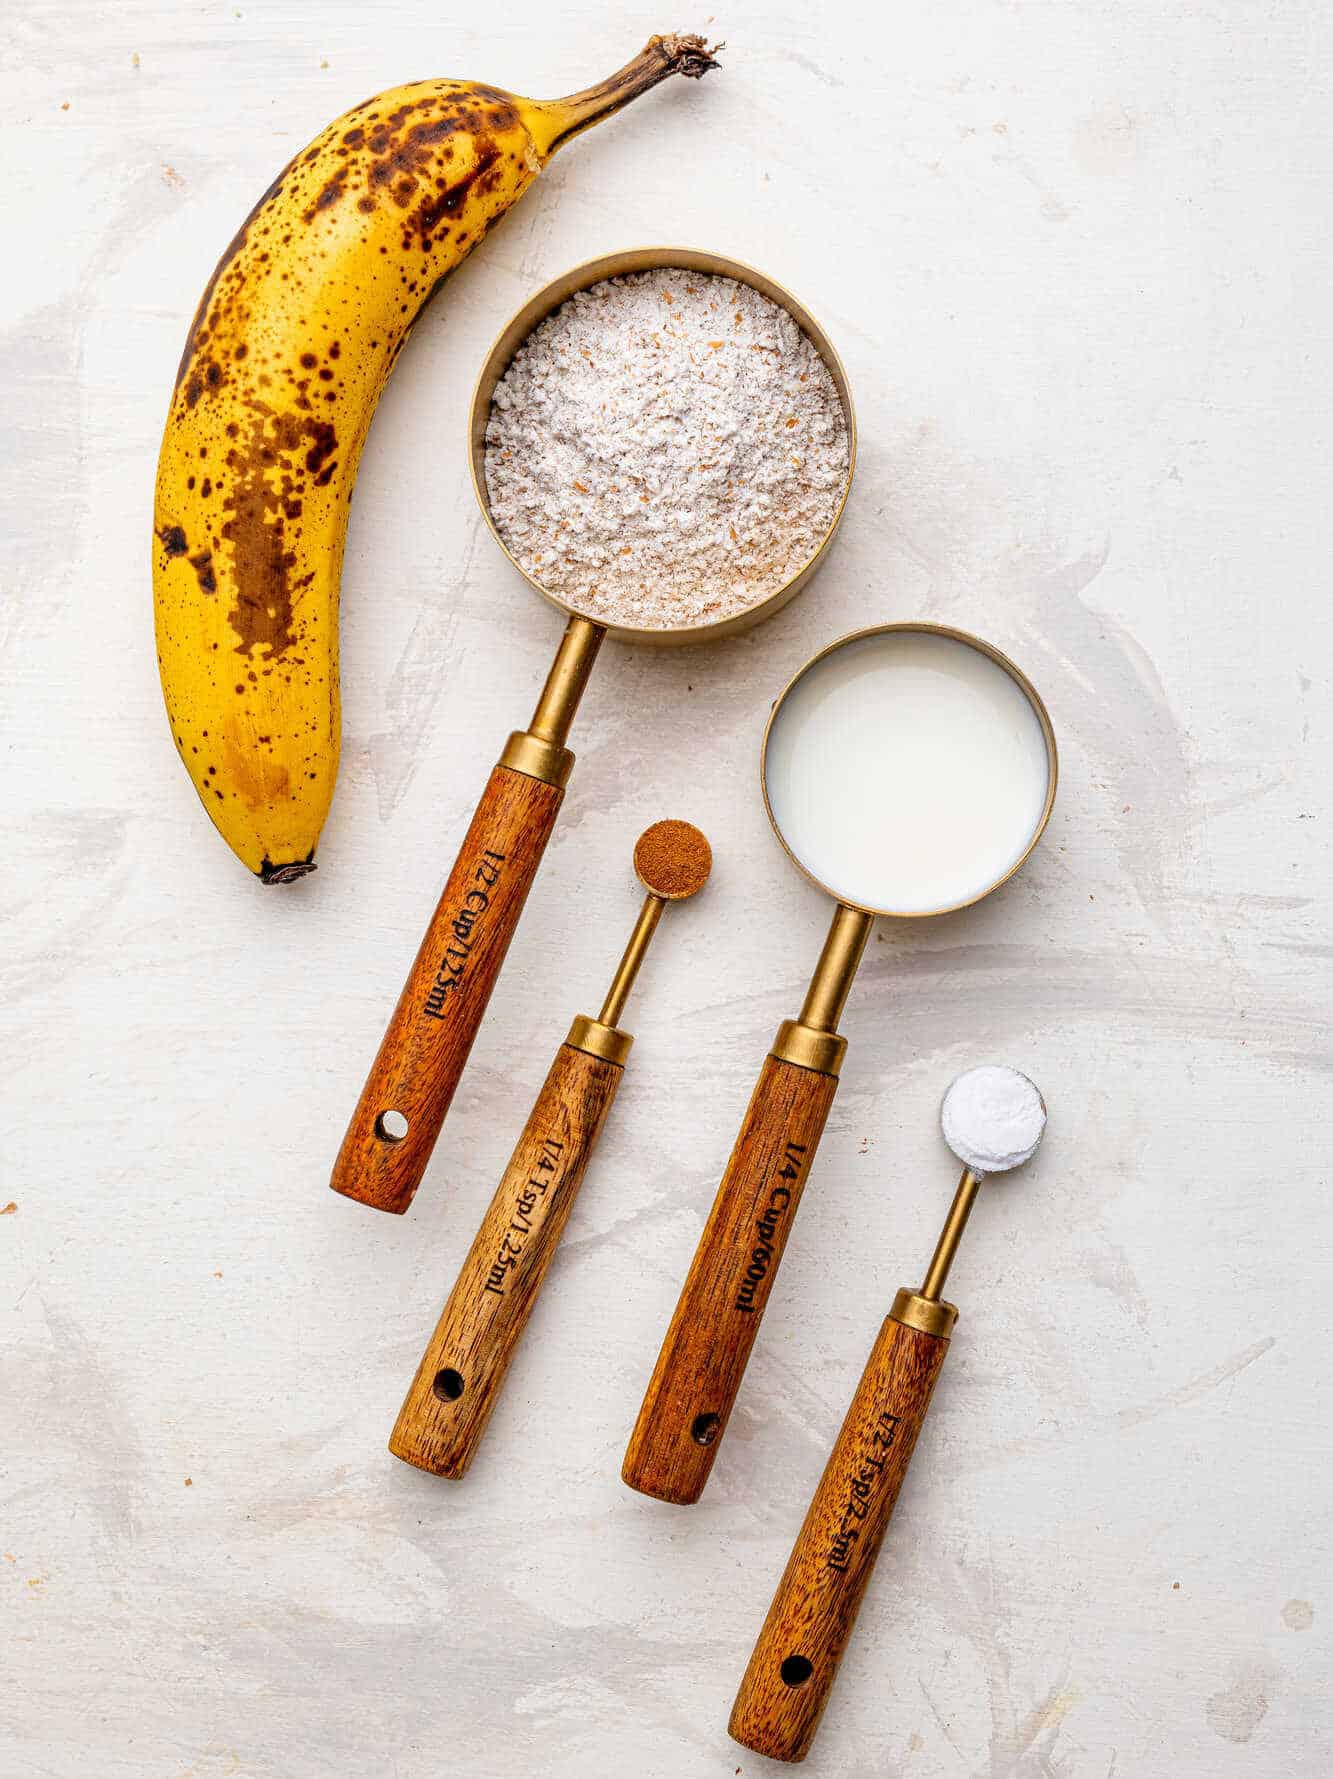 Ingredients for Single-Serve Banana Bread.